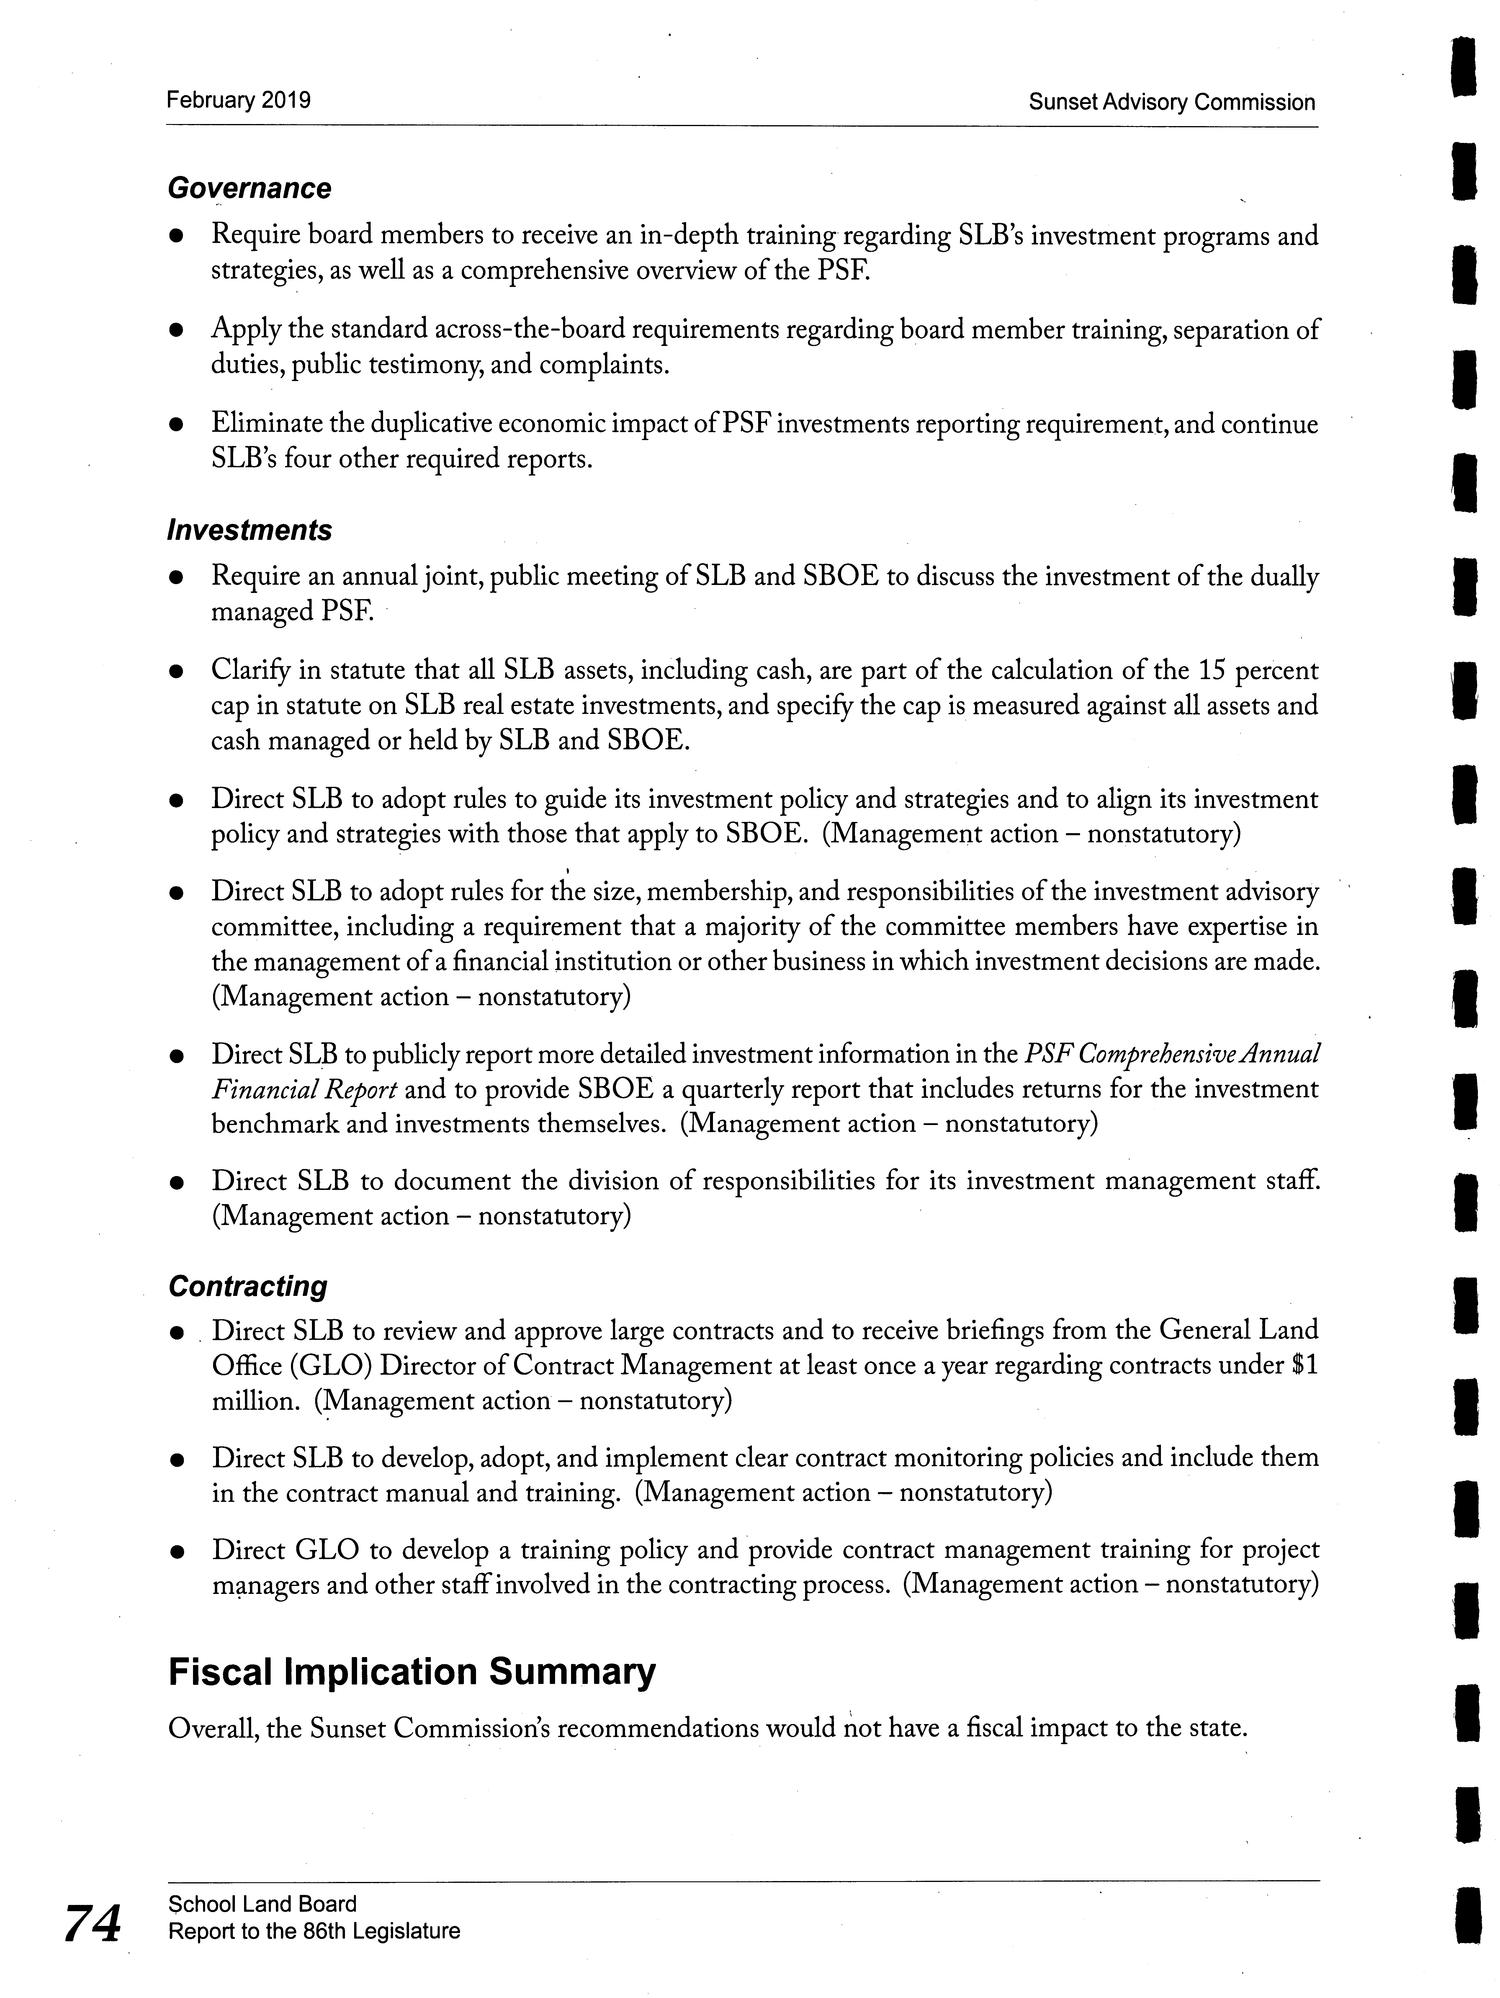 Report to the 86th Legislature: Sunset Advisory Commission
                                                
                                                    74
                                                